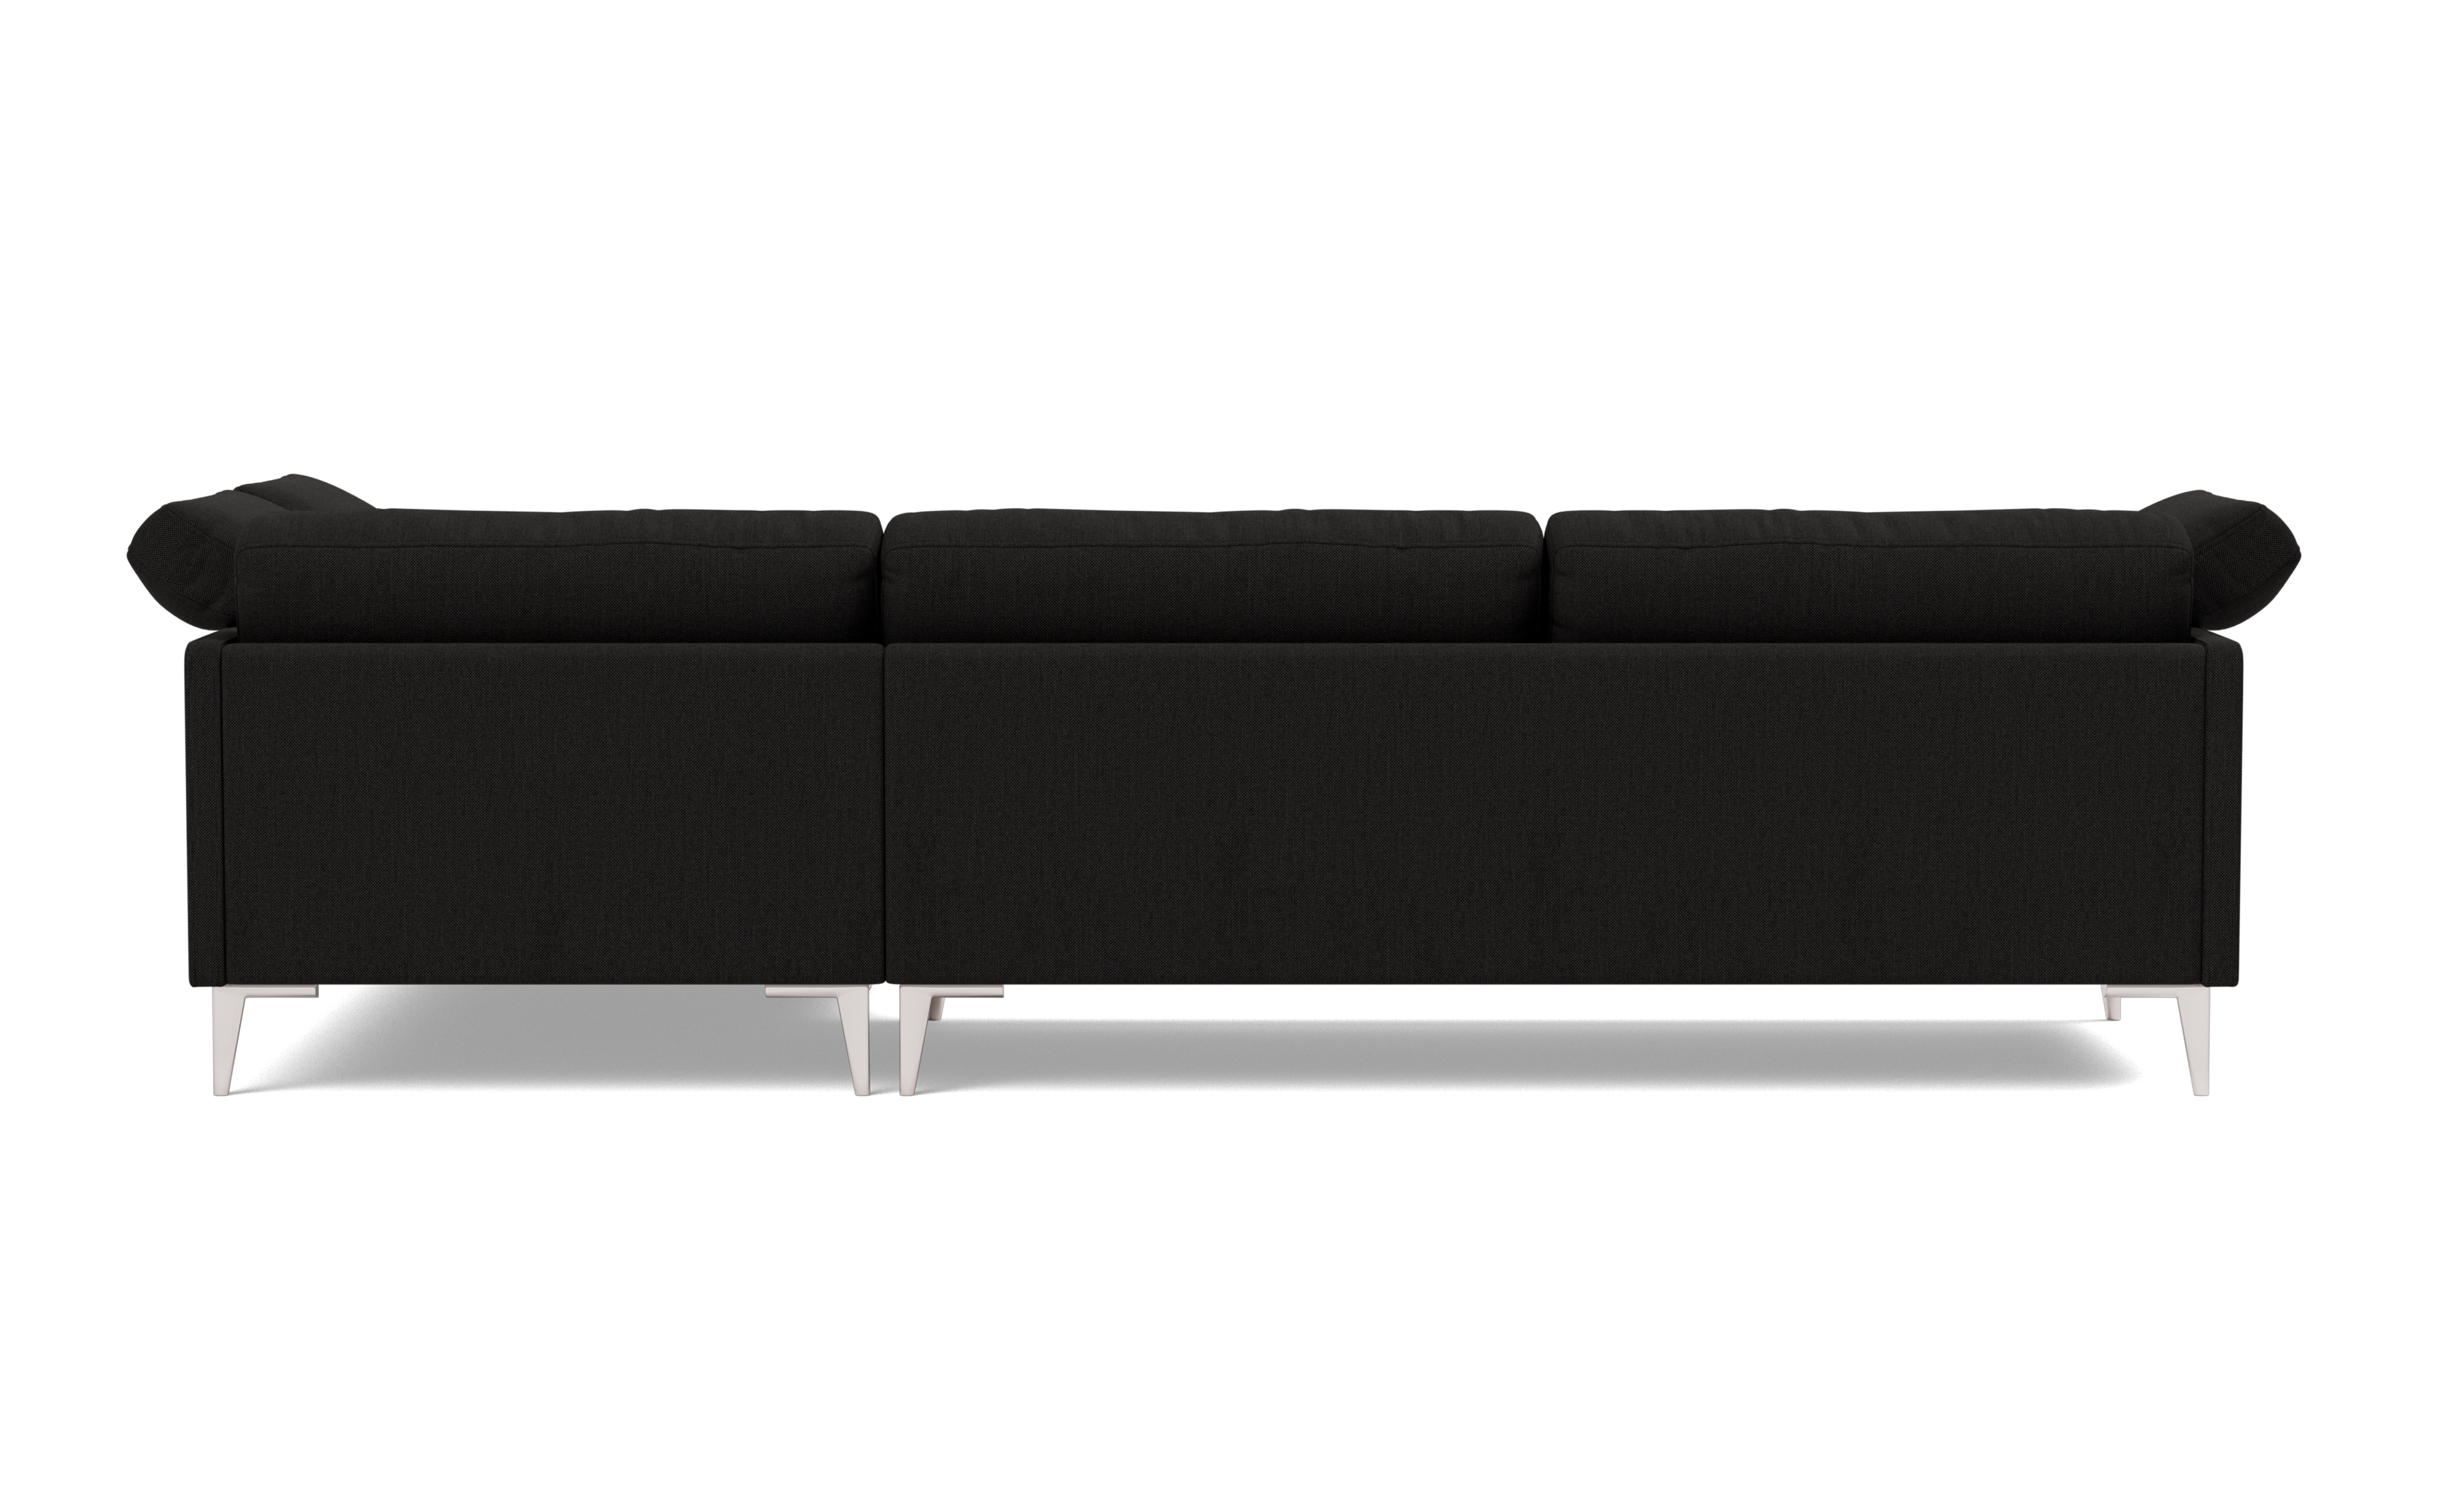 Erik Jørgensen Studio - EJ295 Chaise Sofa, 86 cm cushions